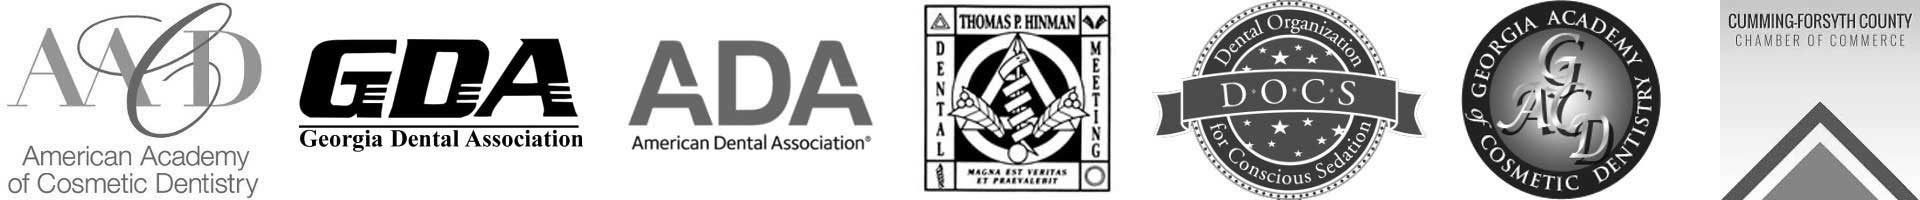 Georgia Dental Association American Dental Association Dental Organizations logos banner